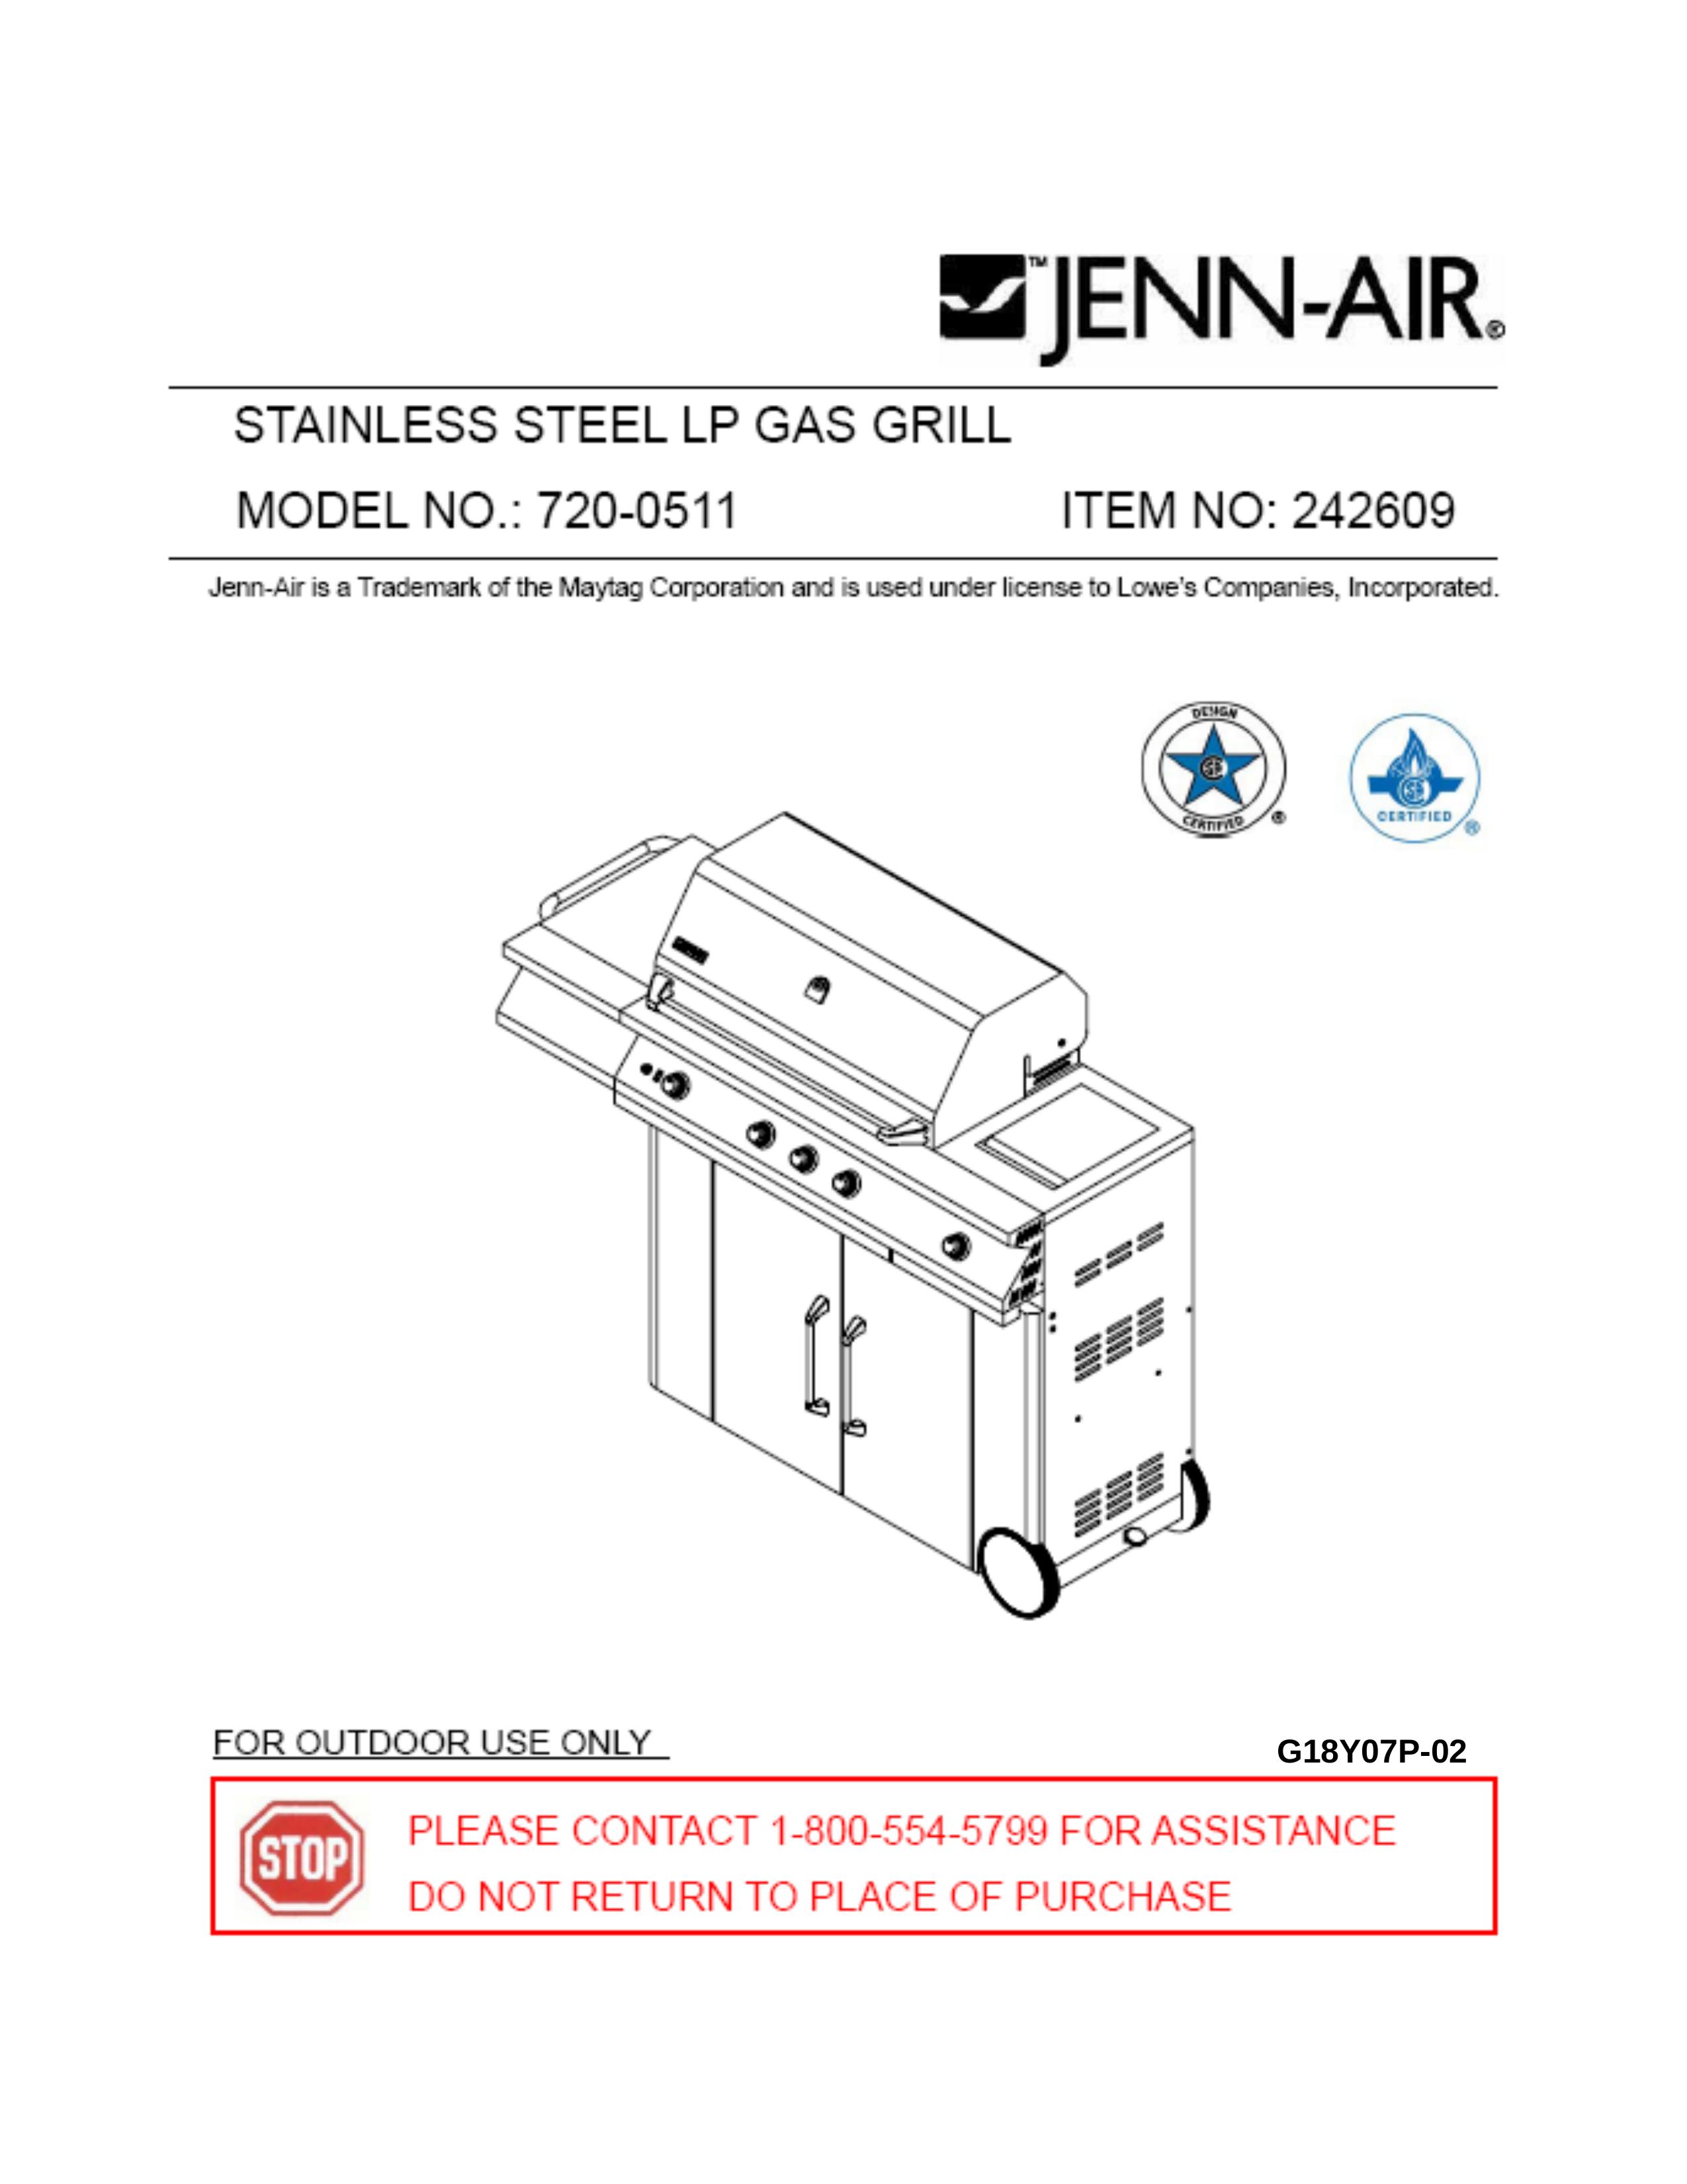 Jenn-Air G18Y07P-02 Gas Grill User Manual